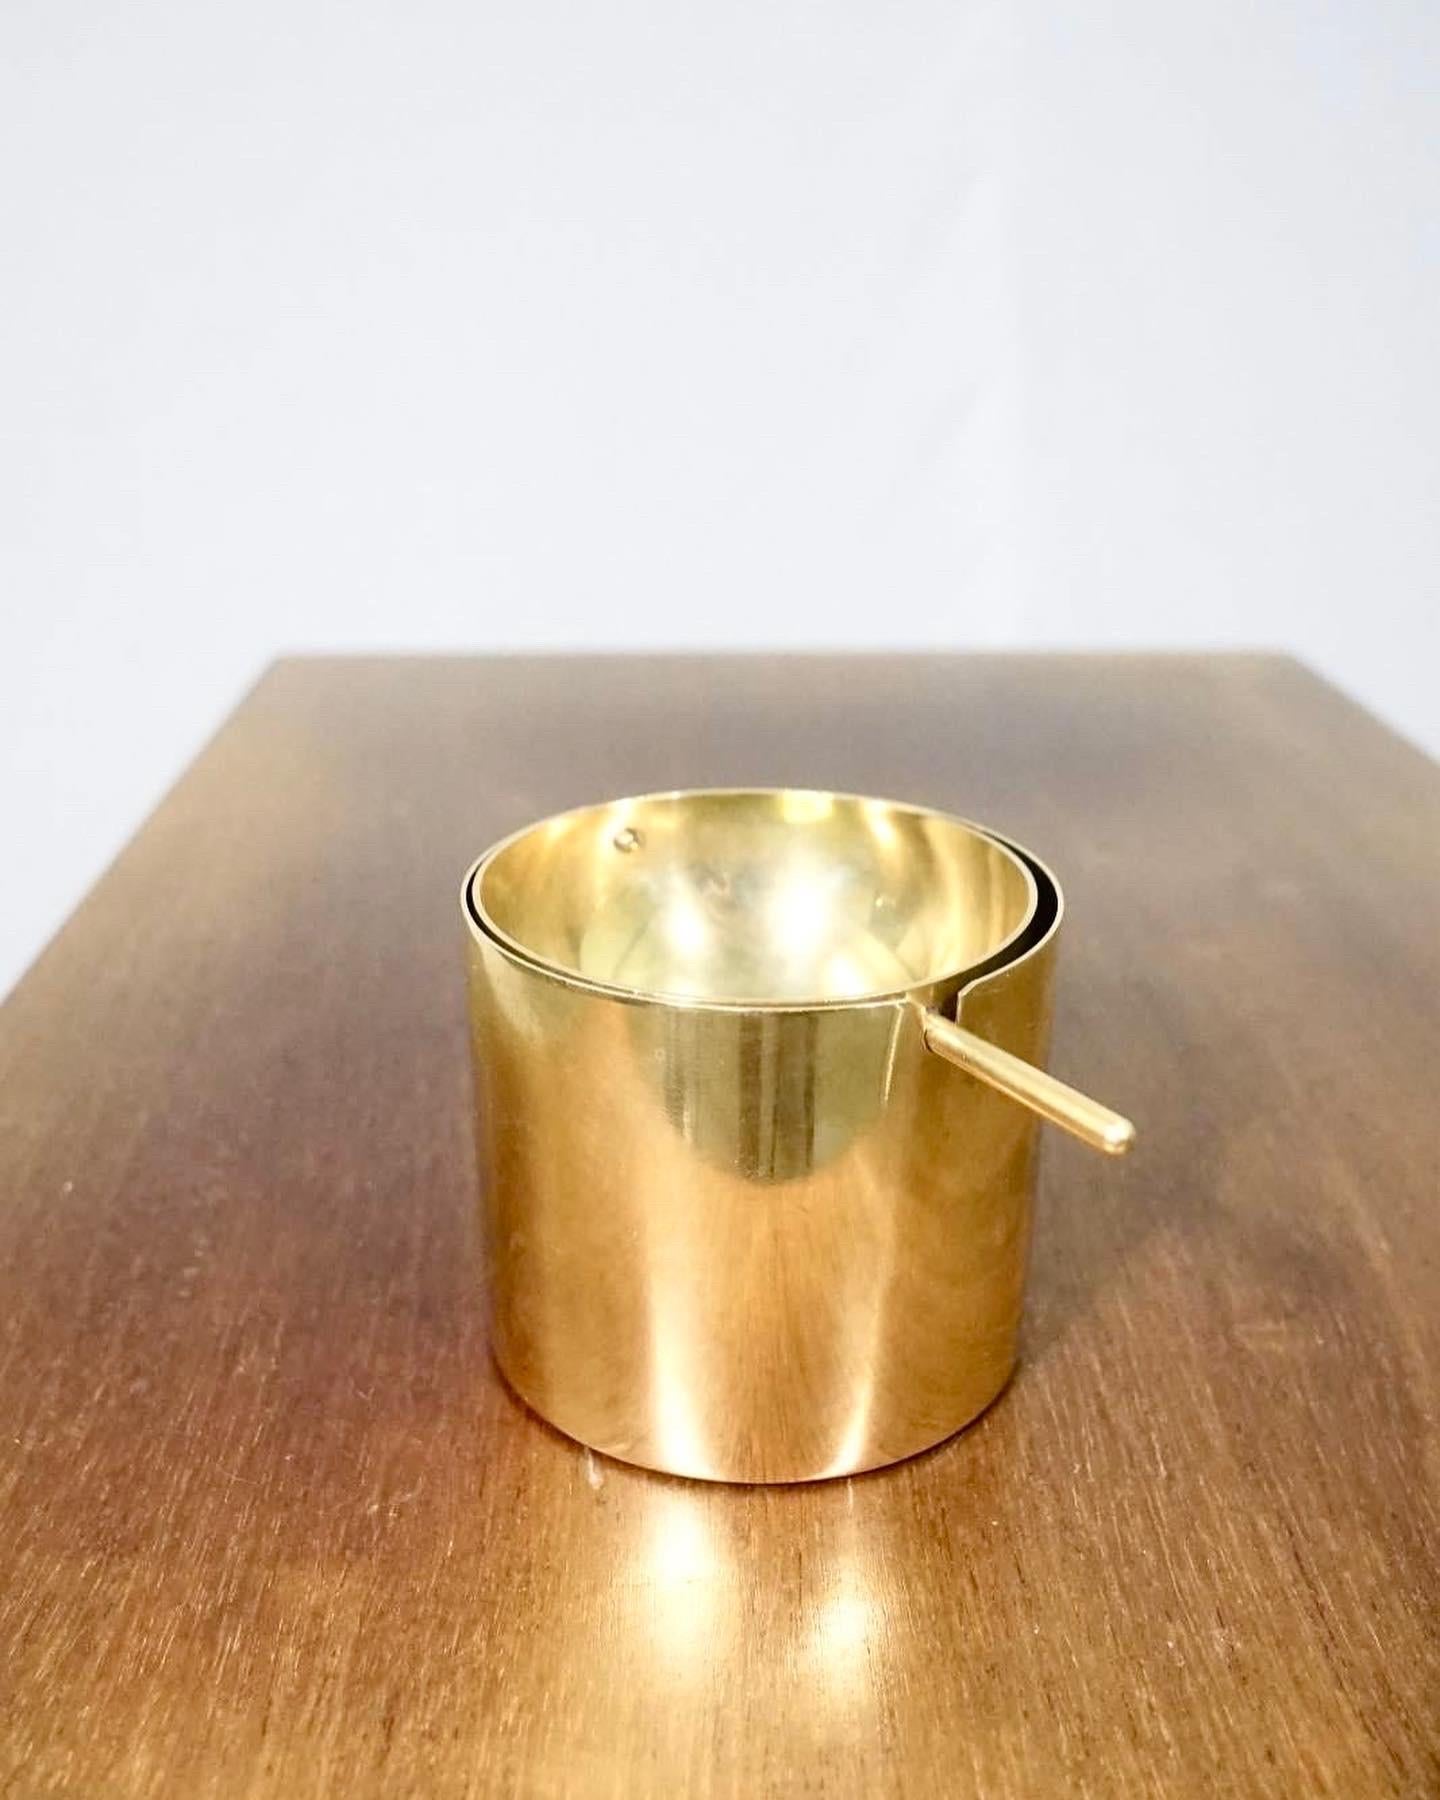 Scandinavian Modern Arne Jacobsen Brass Ashtray Manufactured by Stelton